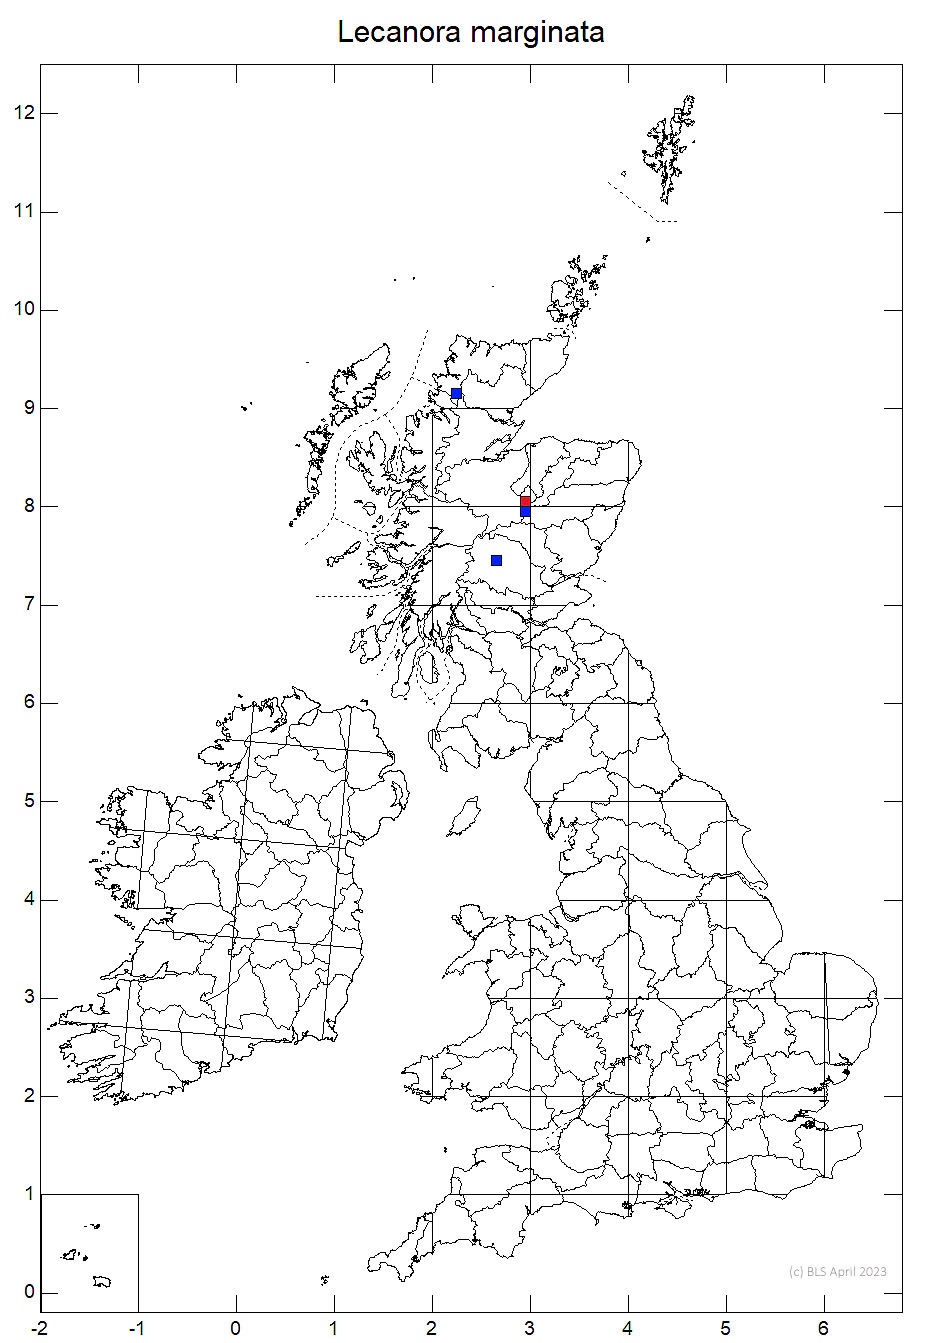 Lecanora marginata 10km sq distribution map